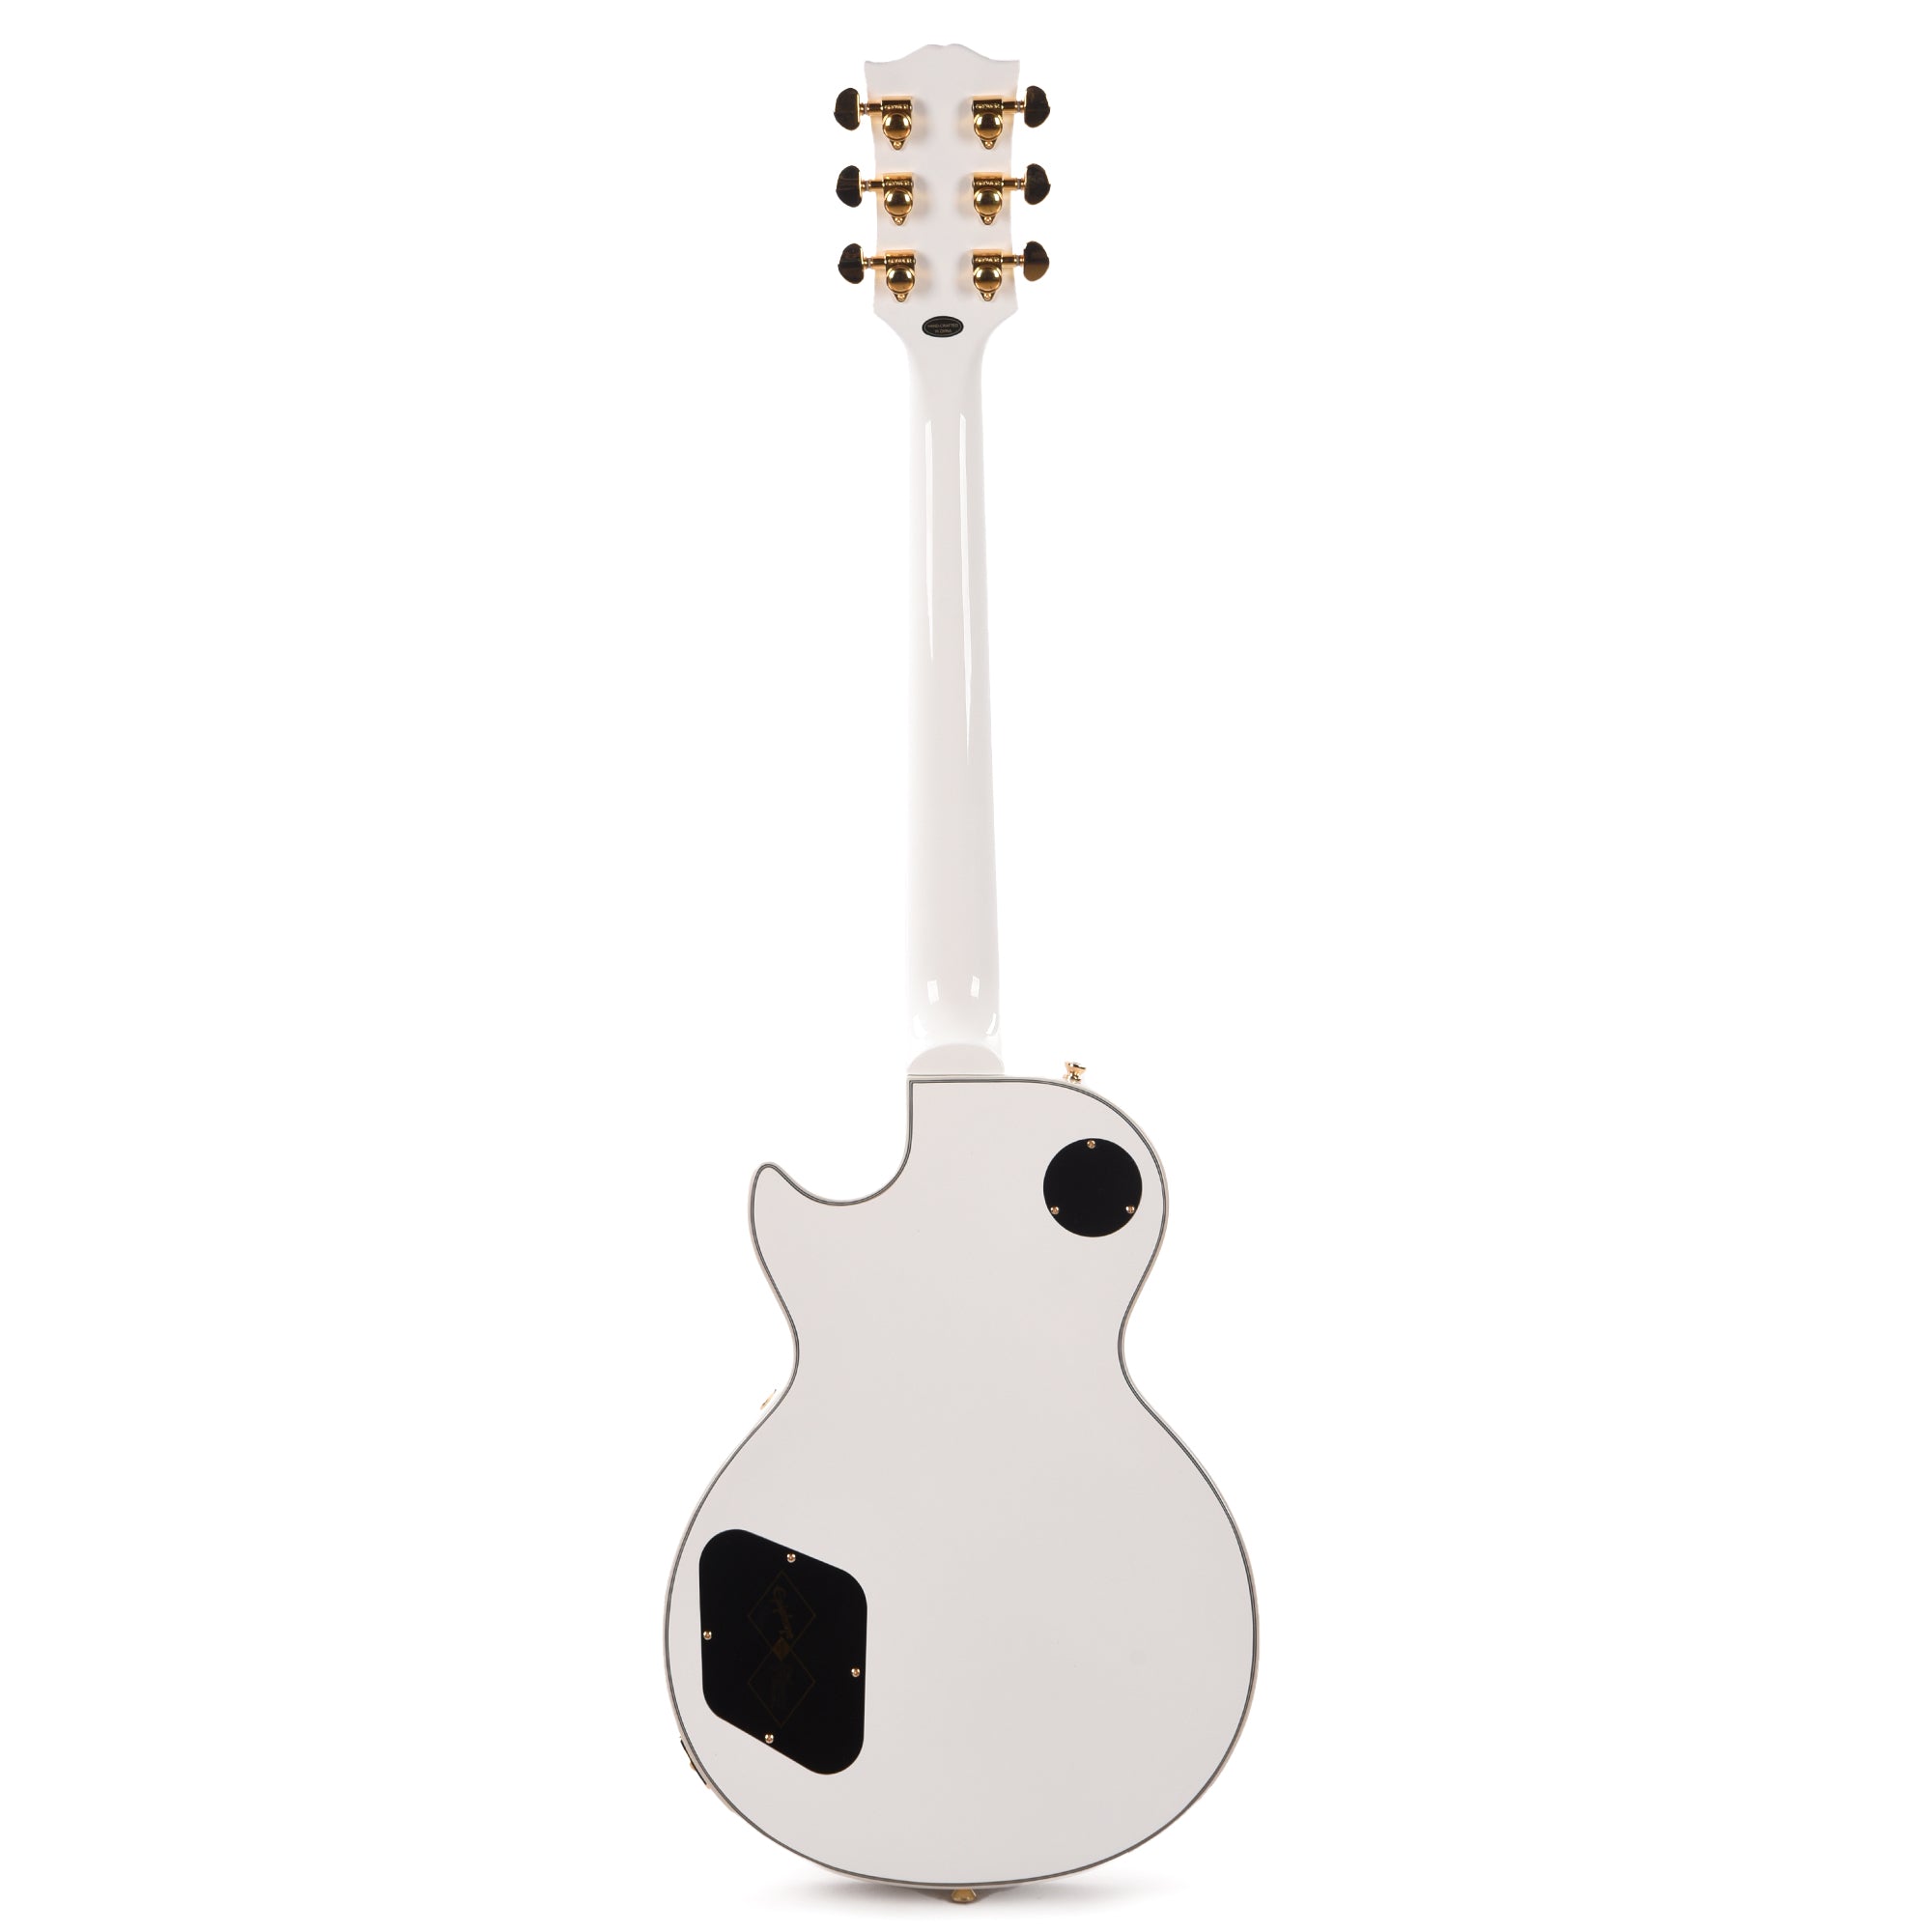 Epiphone Inspired by Gibson Custom Les Paul Custom Alpine White